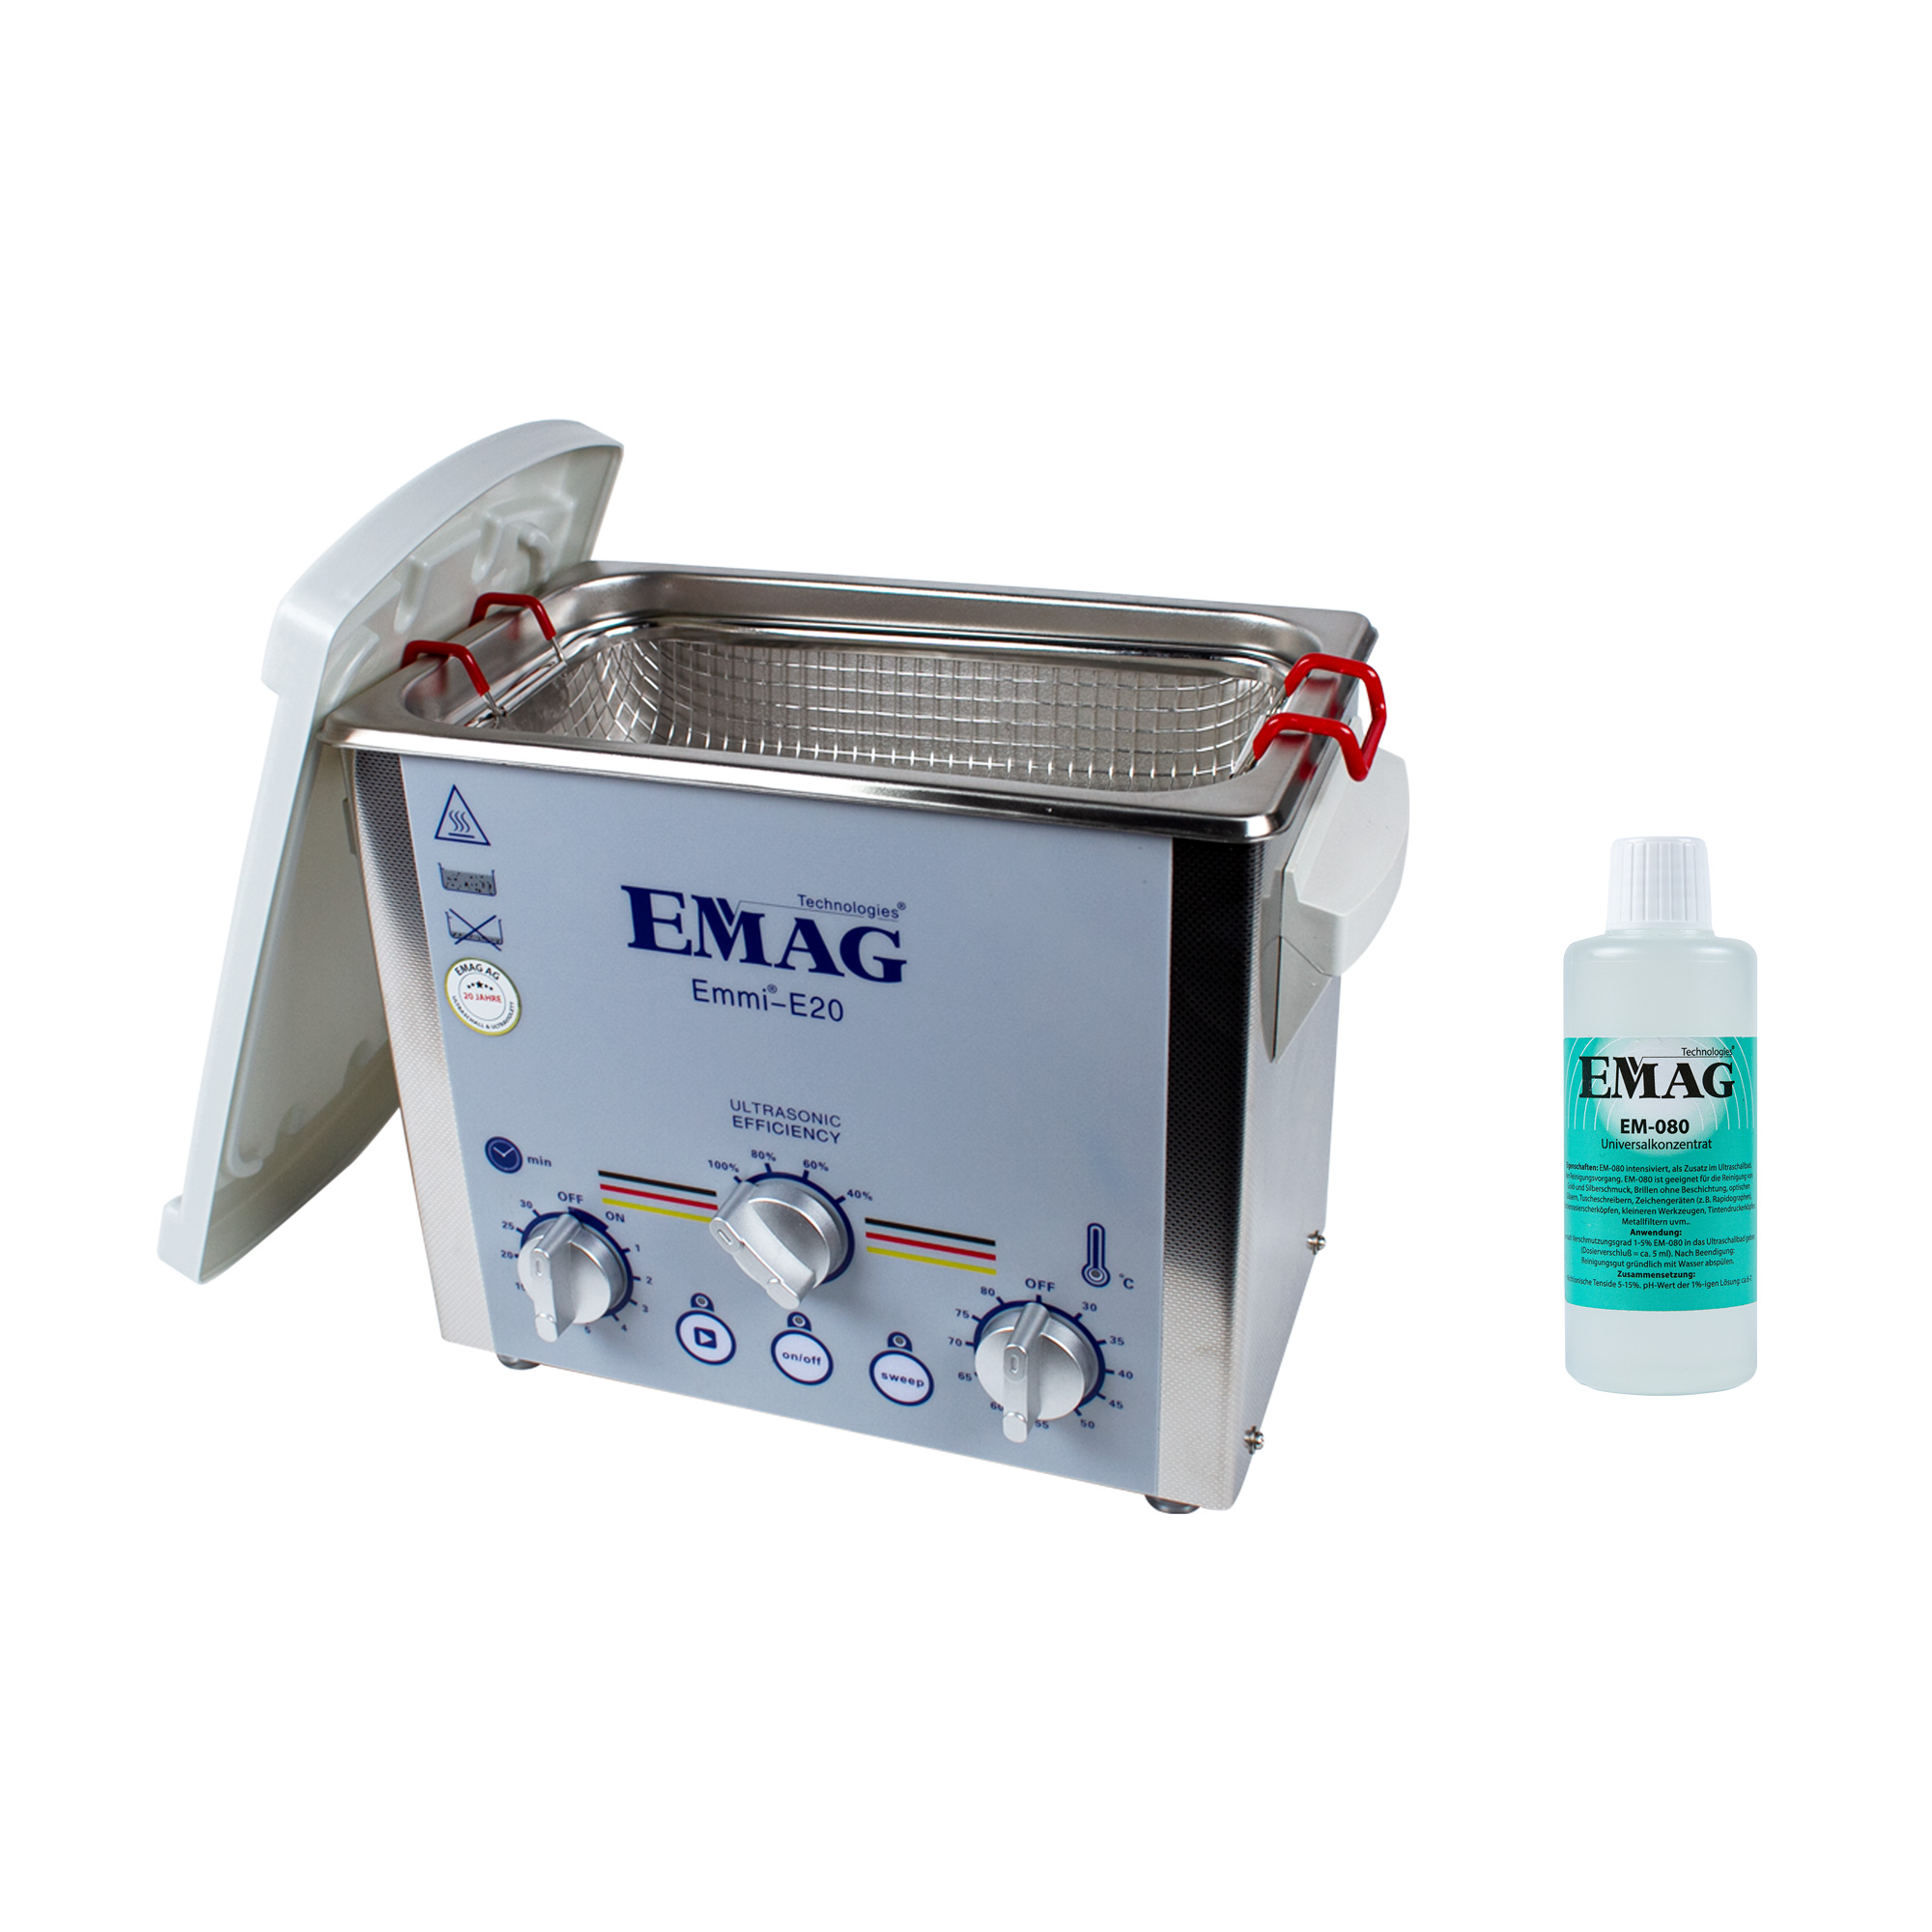 EMAG emmi® Edelstahl Ultraschallreiniger E20 Ultraschallreinigungsgerät